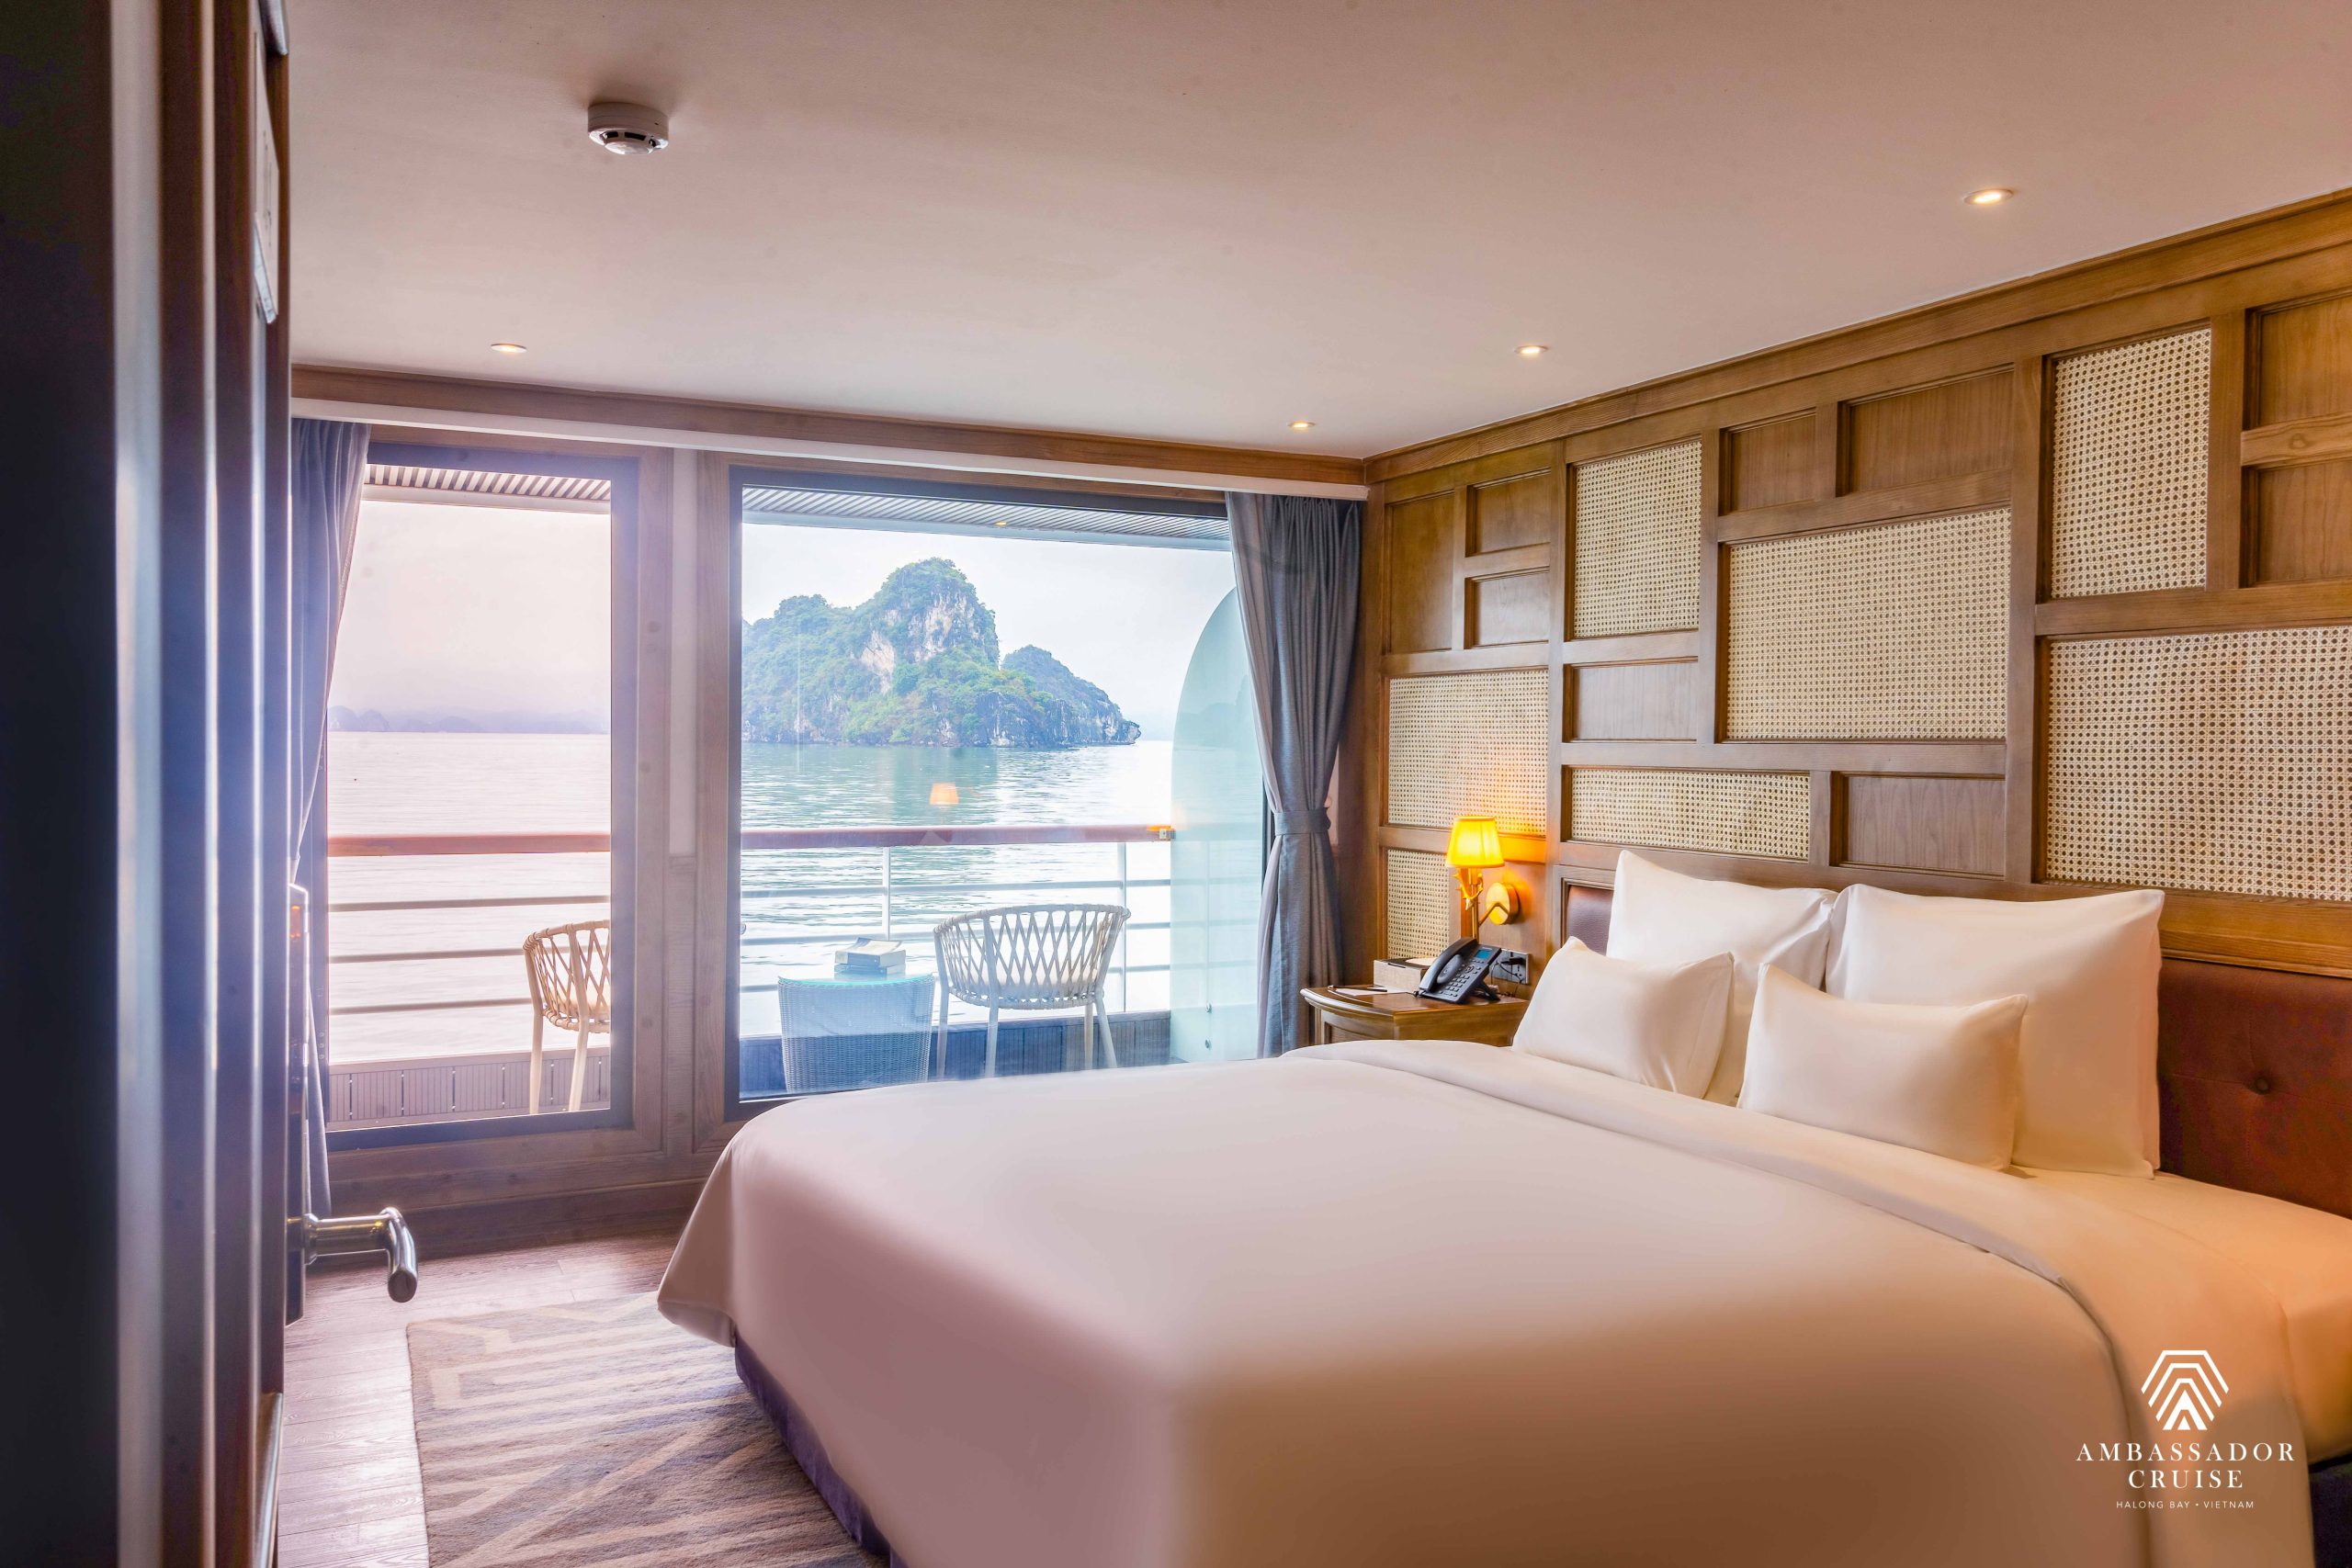 Ambassador cruise deluxe room overview